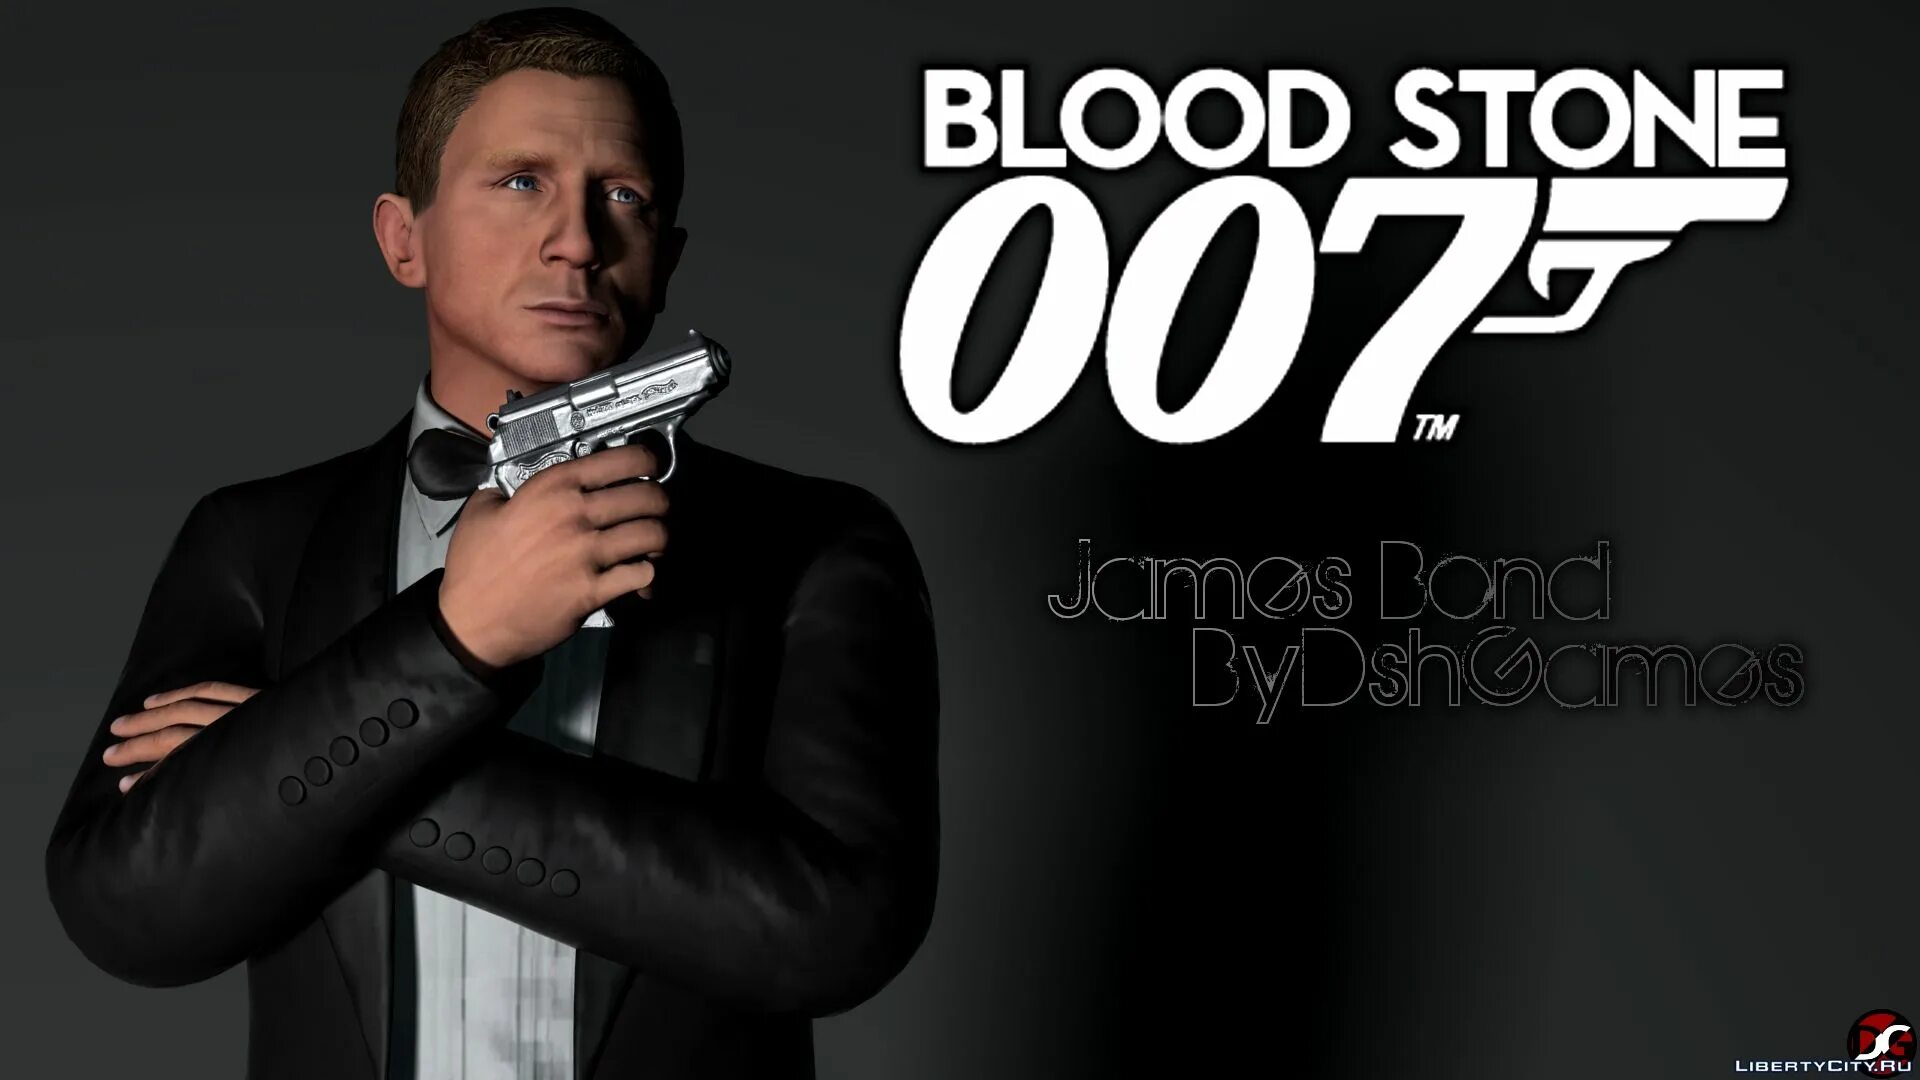 James Bond 007 Blood Stone игра. 007 Blood Stone. James Bond 007 Bloodstone. James Bond 007: Blood Stone (2010). 7 стоун